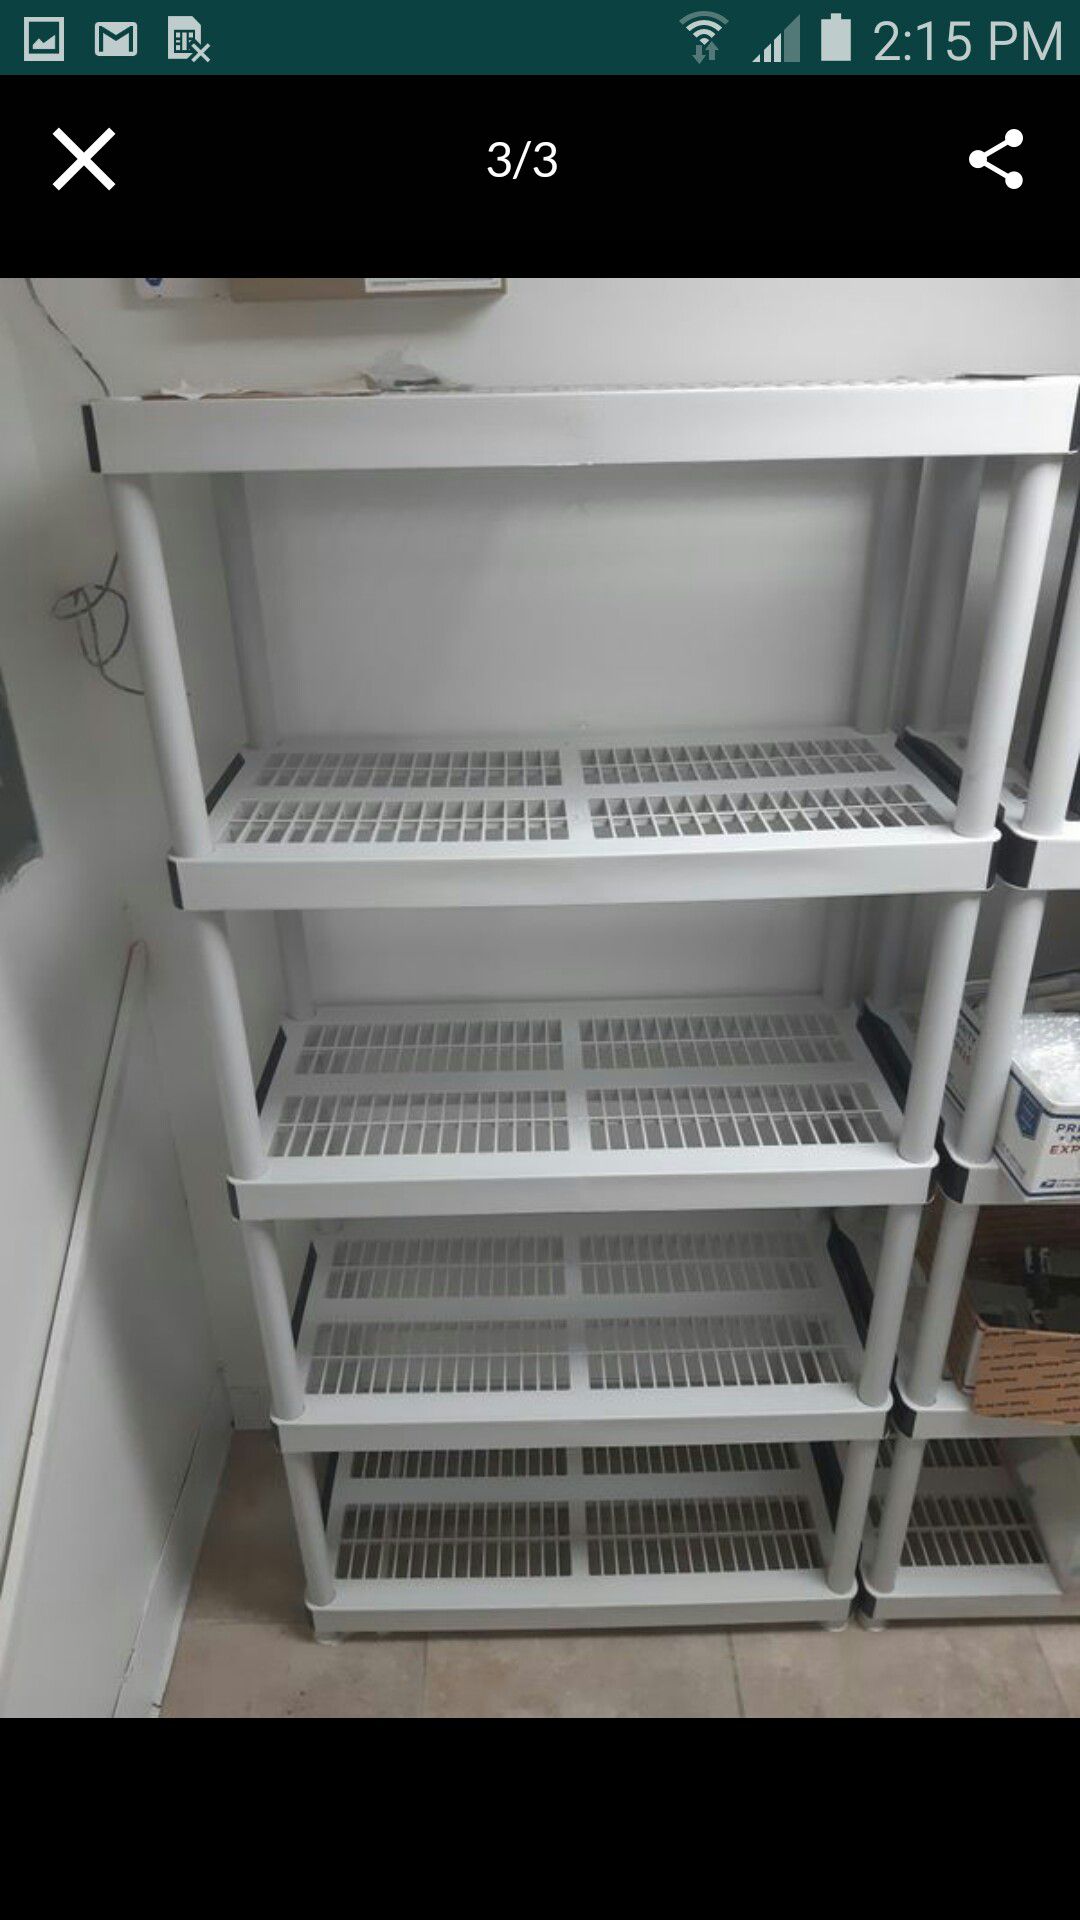 Plastic and metallic shelves - 5 level